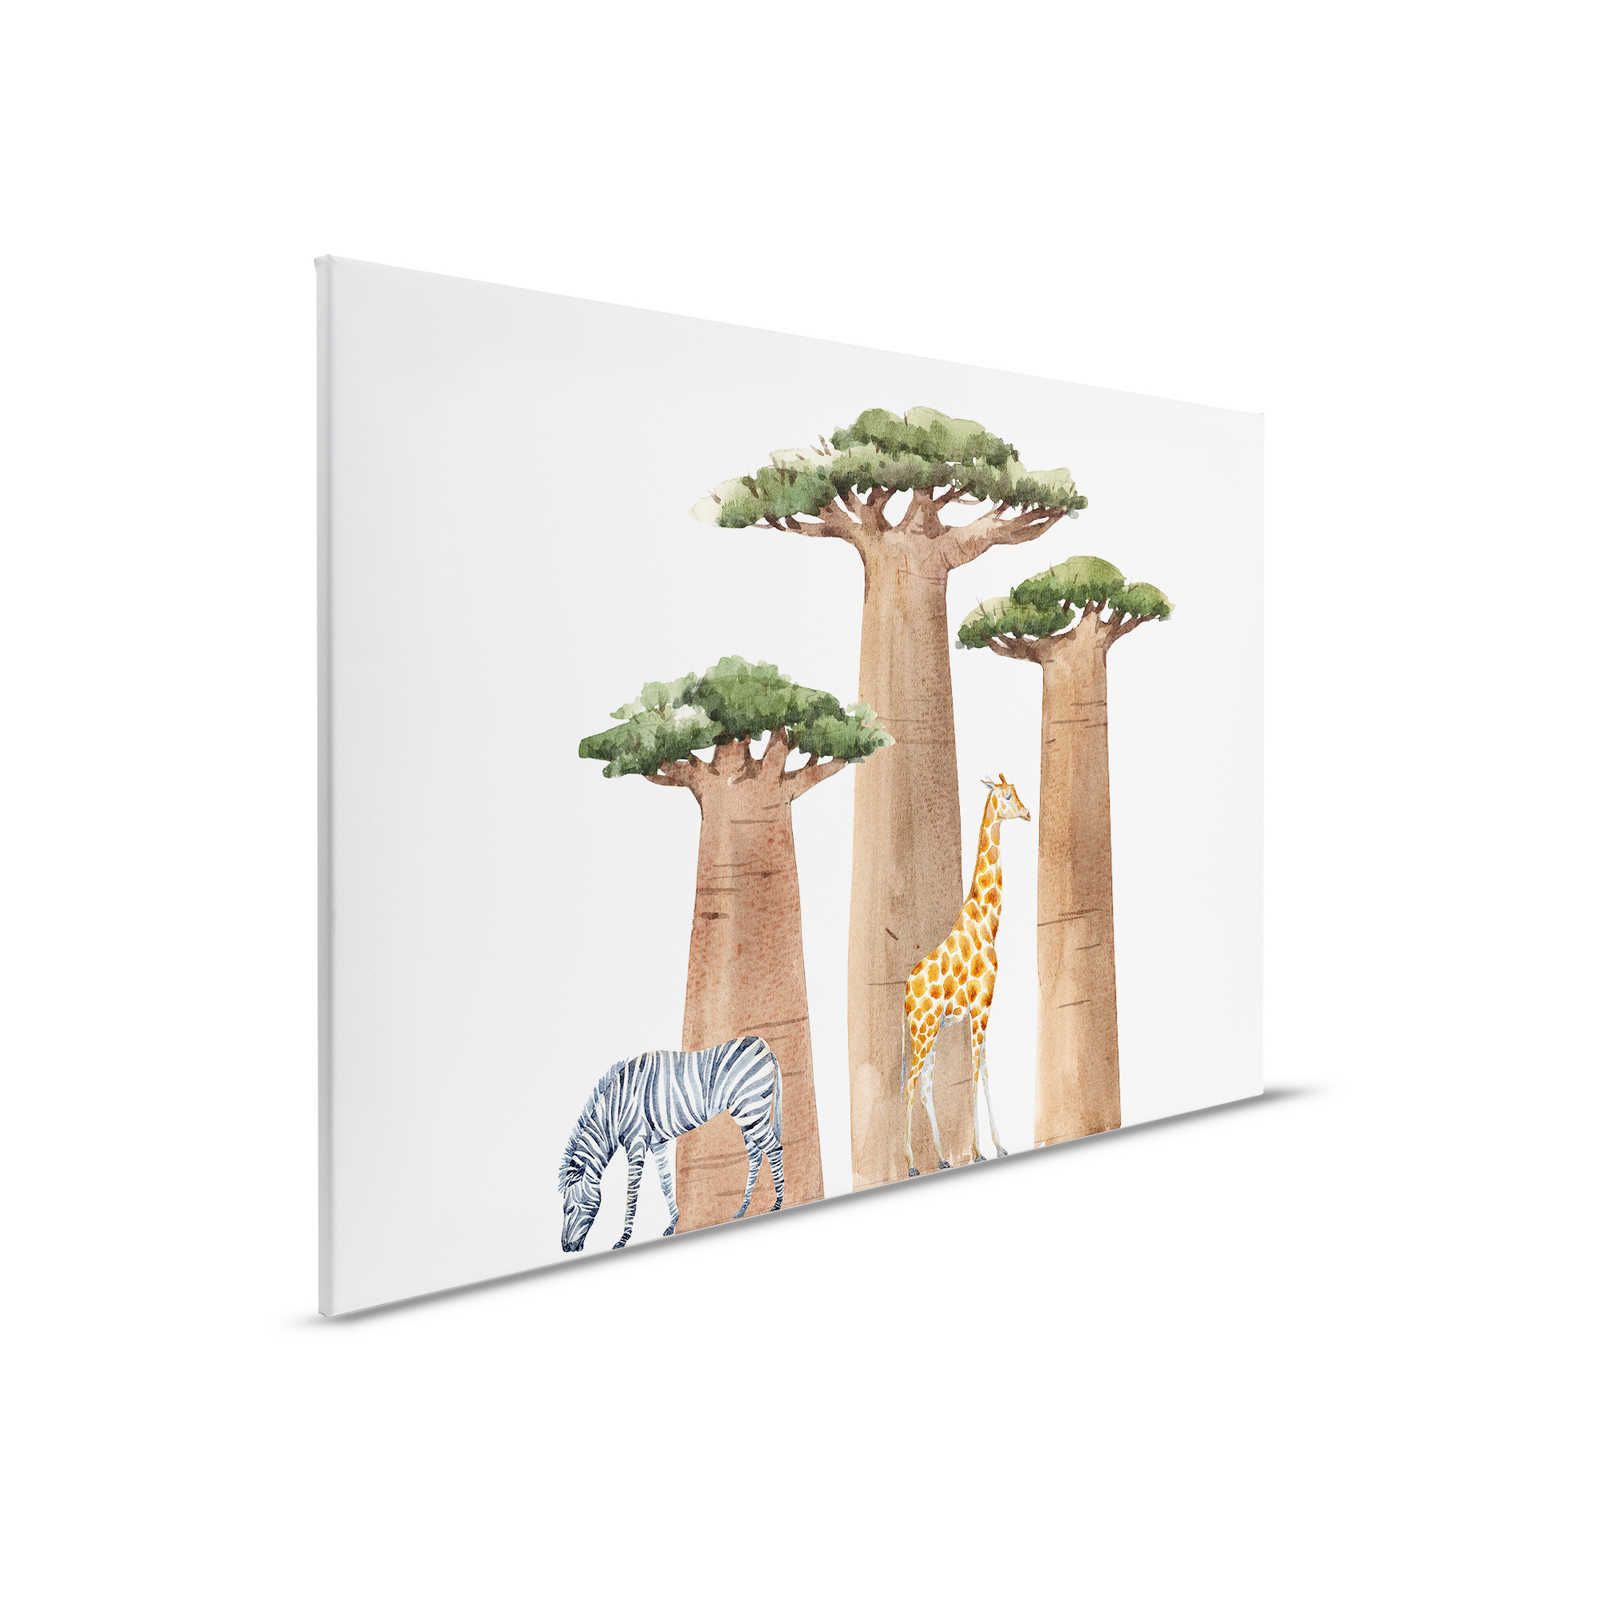 Toile Savane avec girafe et zèbre - 90 cm x 60 cm
